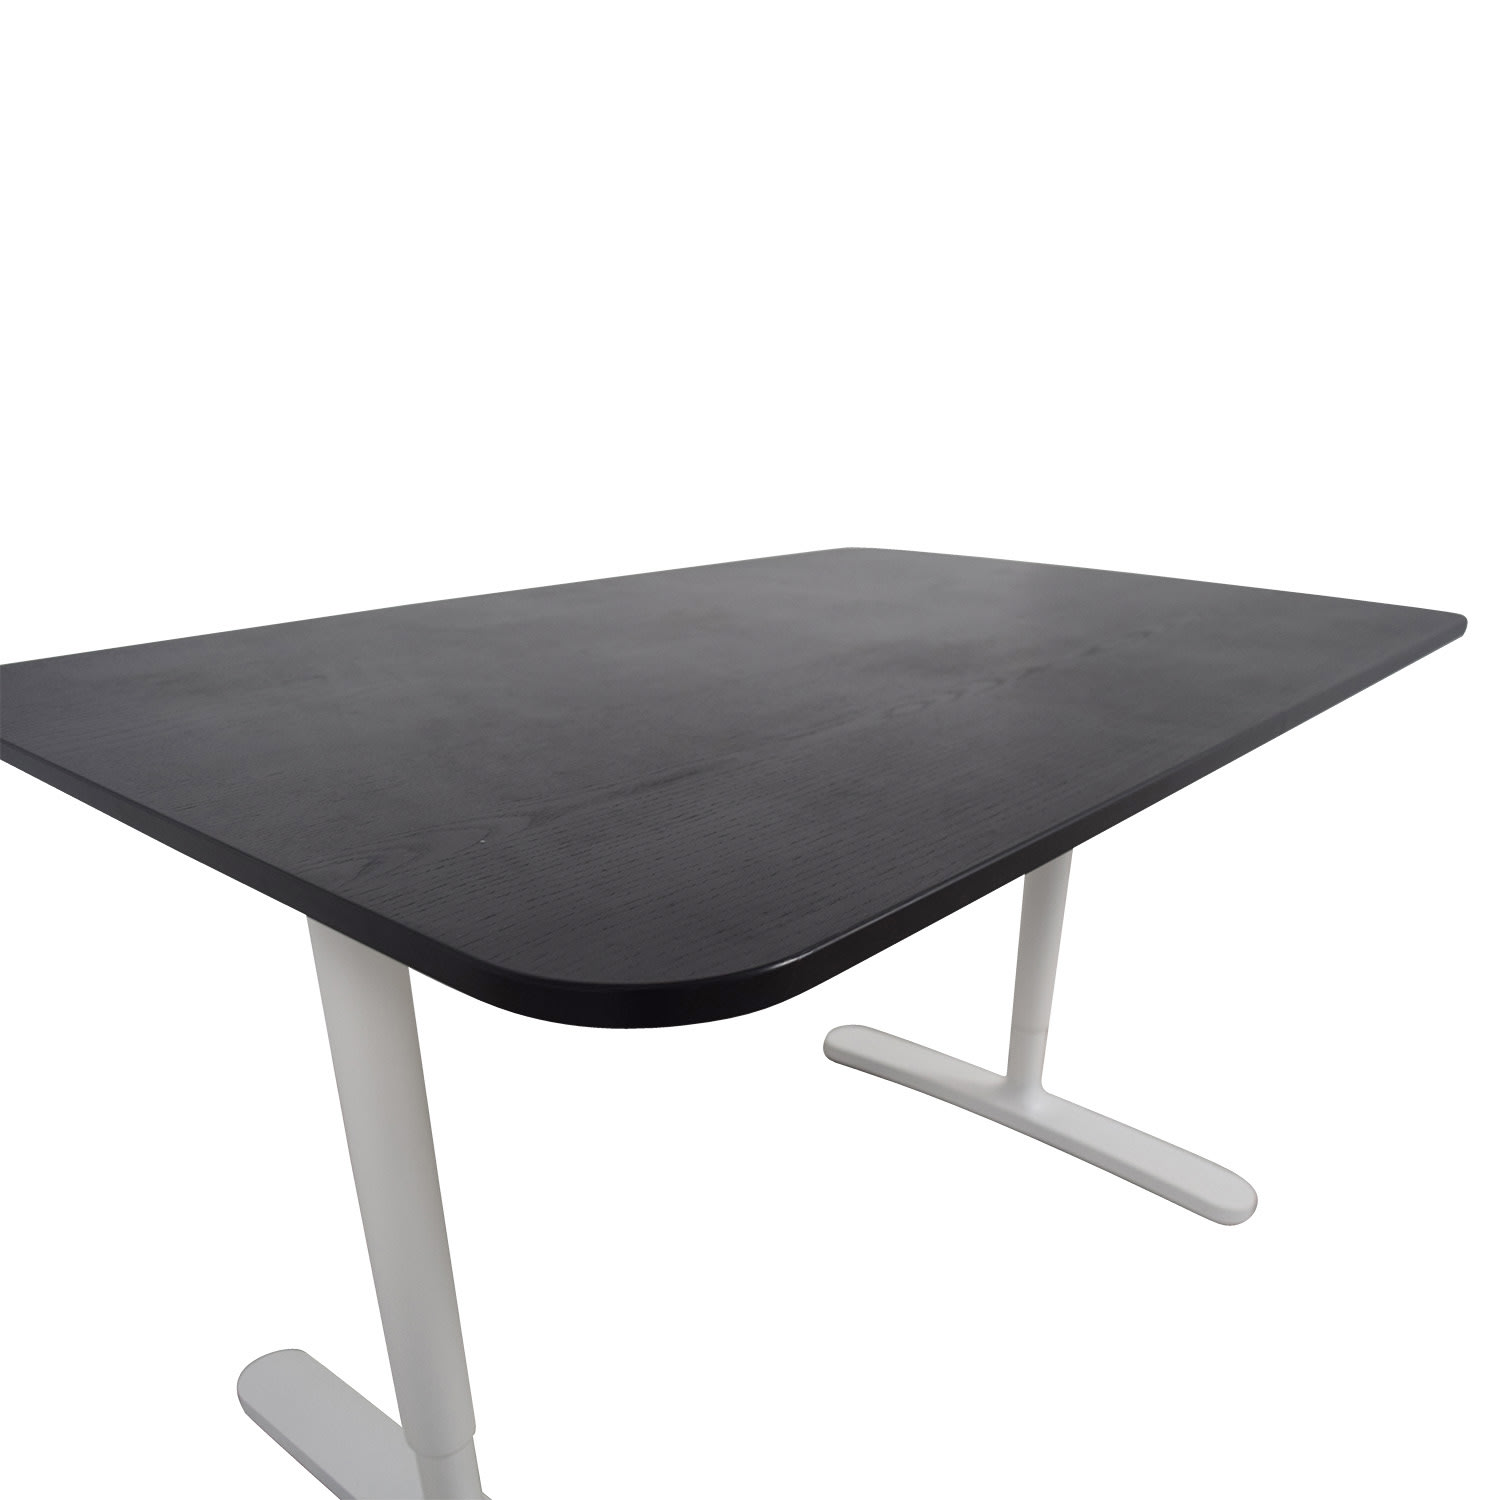 BEKANT white, Table top, 140x60 cm - IKEA